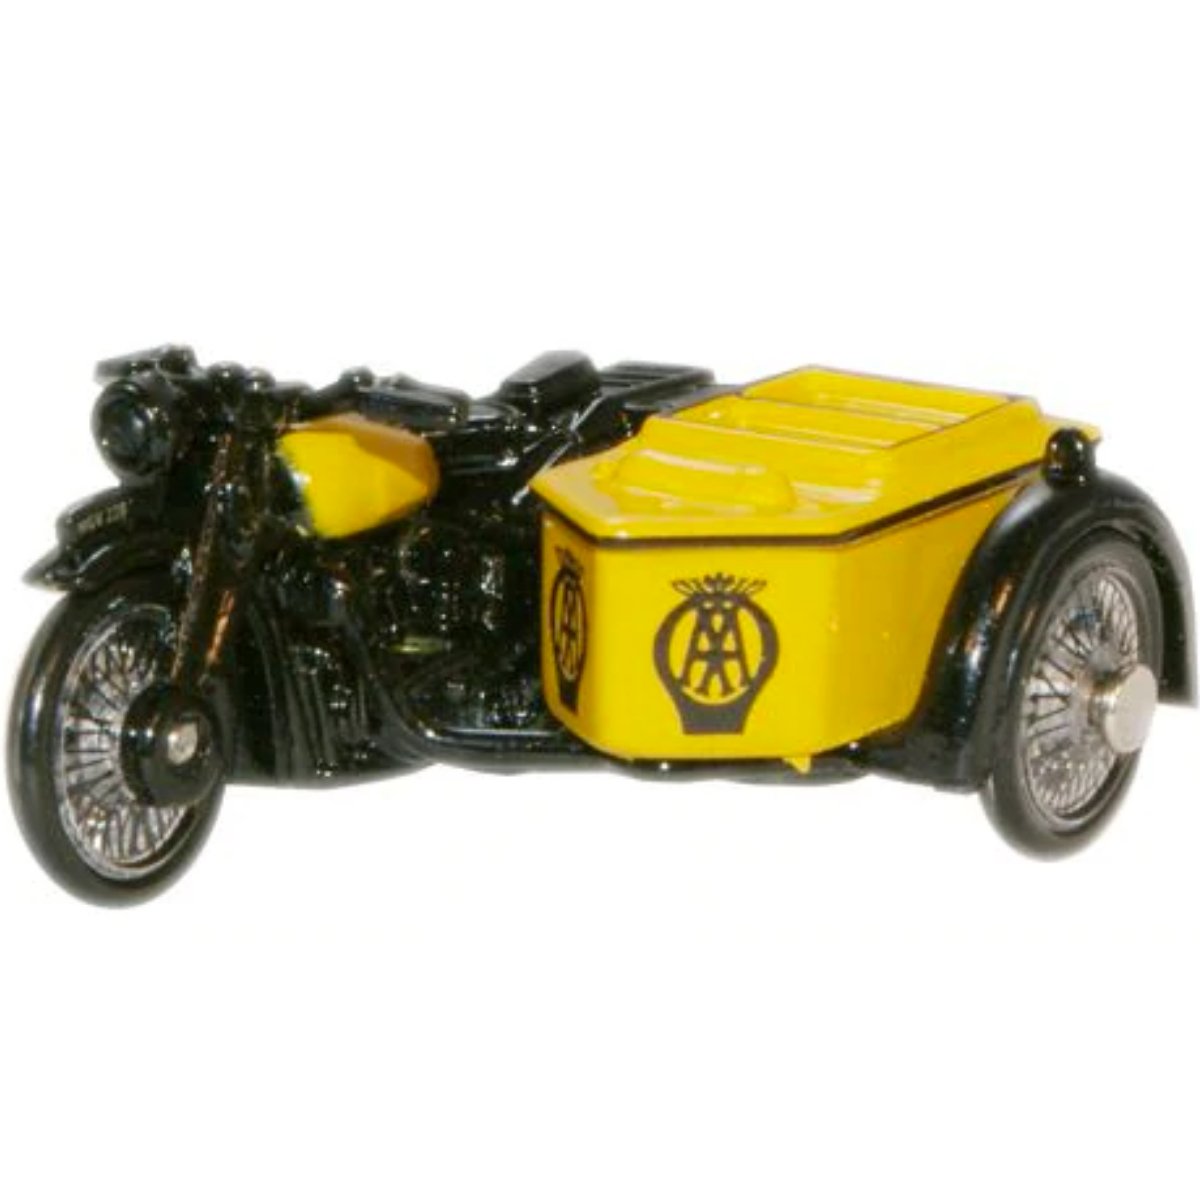 Oxford Diecast 76BSA001 AA Motorcycle & Sidecar - Phillips Hobbies